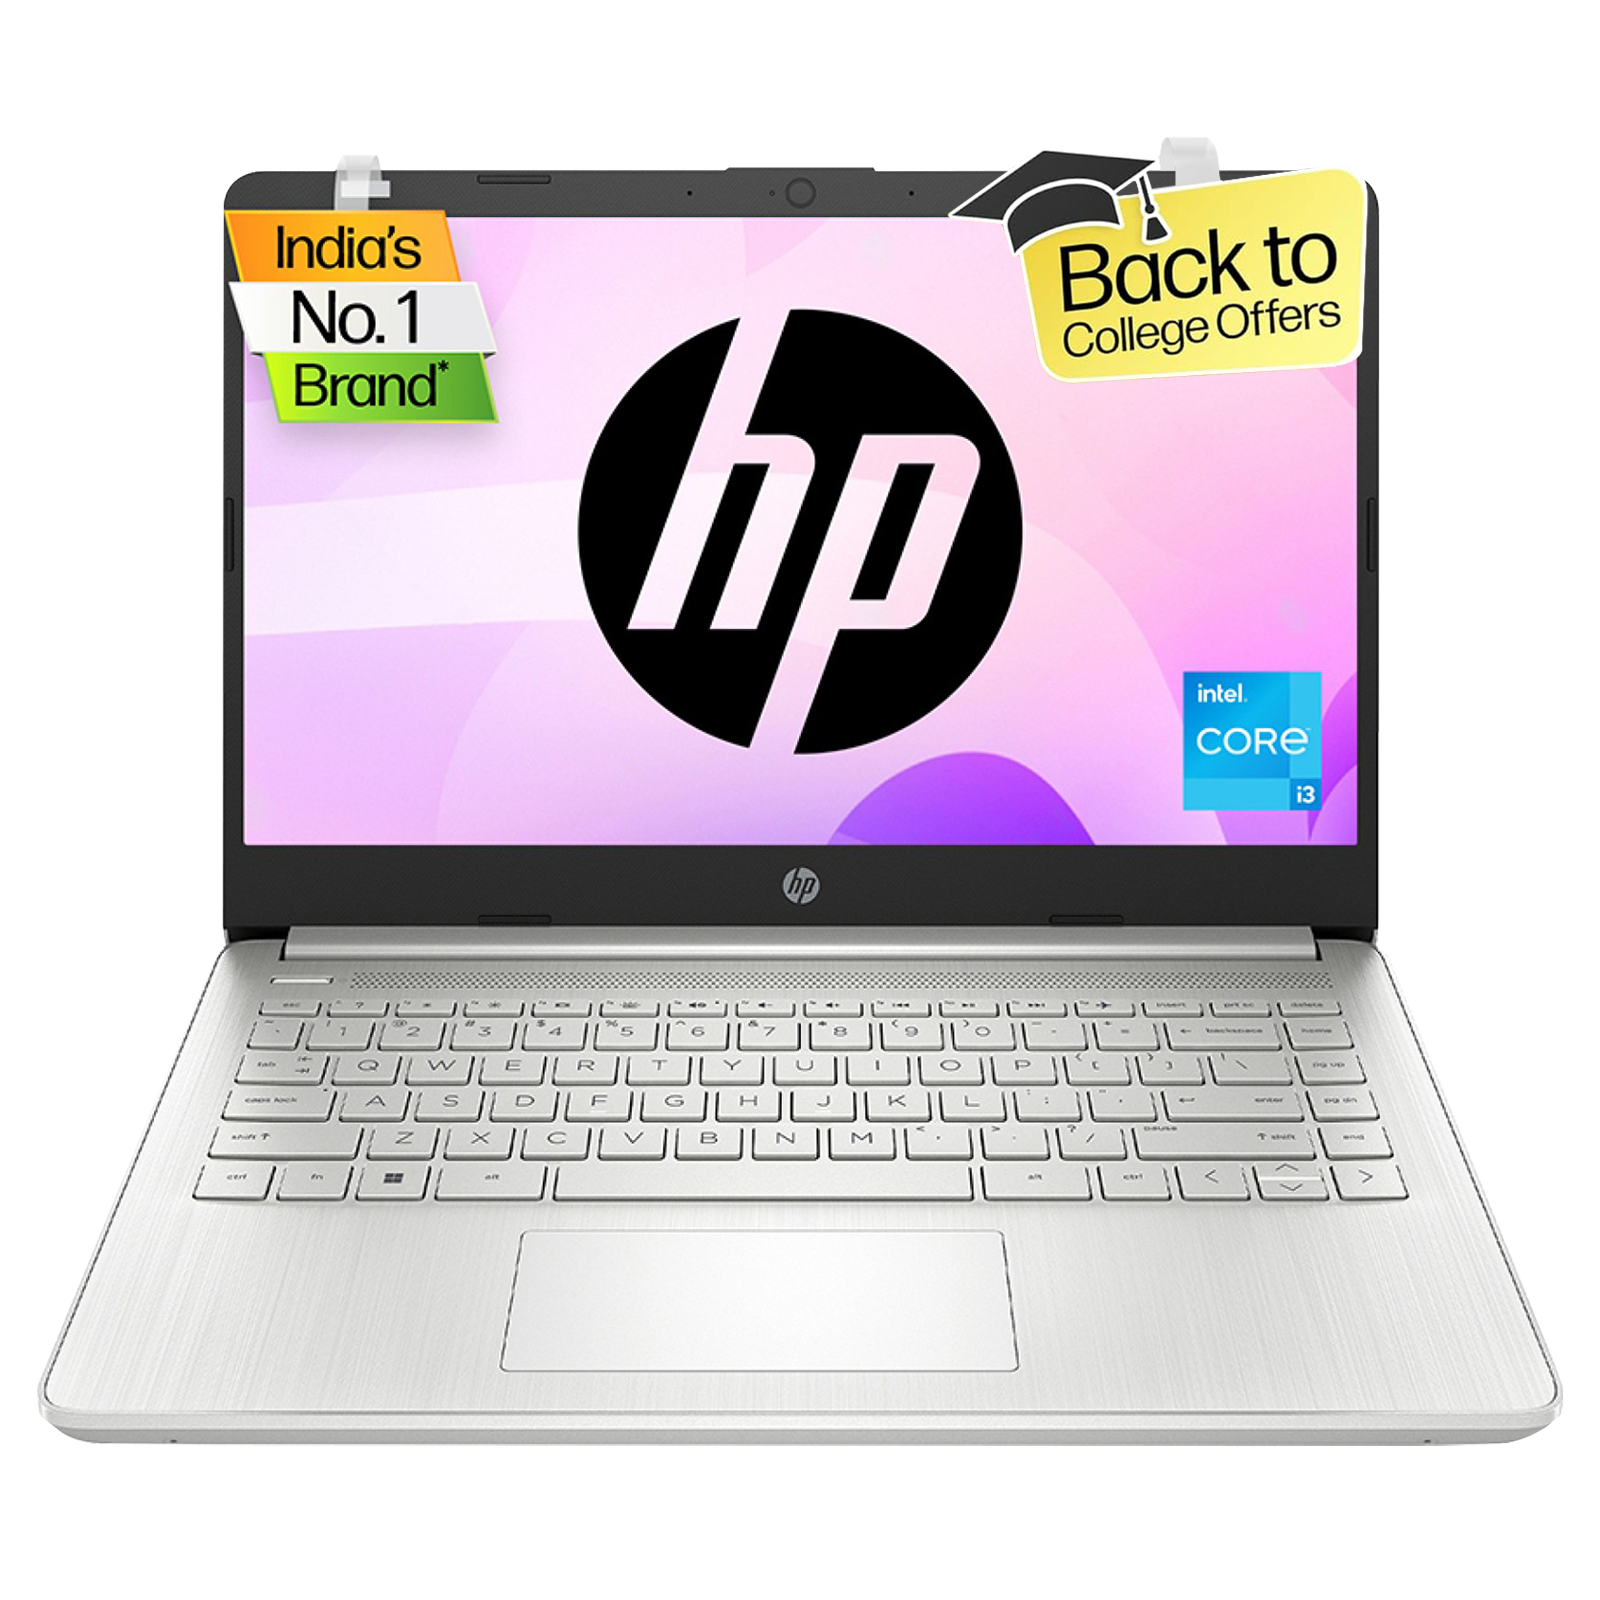 HP 14s-dq5138tu Intel Core i3 12th Gen Laptop (8GB, 512GB SSD, Windows 11 Home, 14 inch Full HD IPS Display, MS Office 2021, Natual Silver, 1.46 KG)